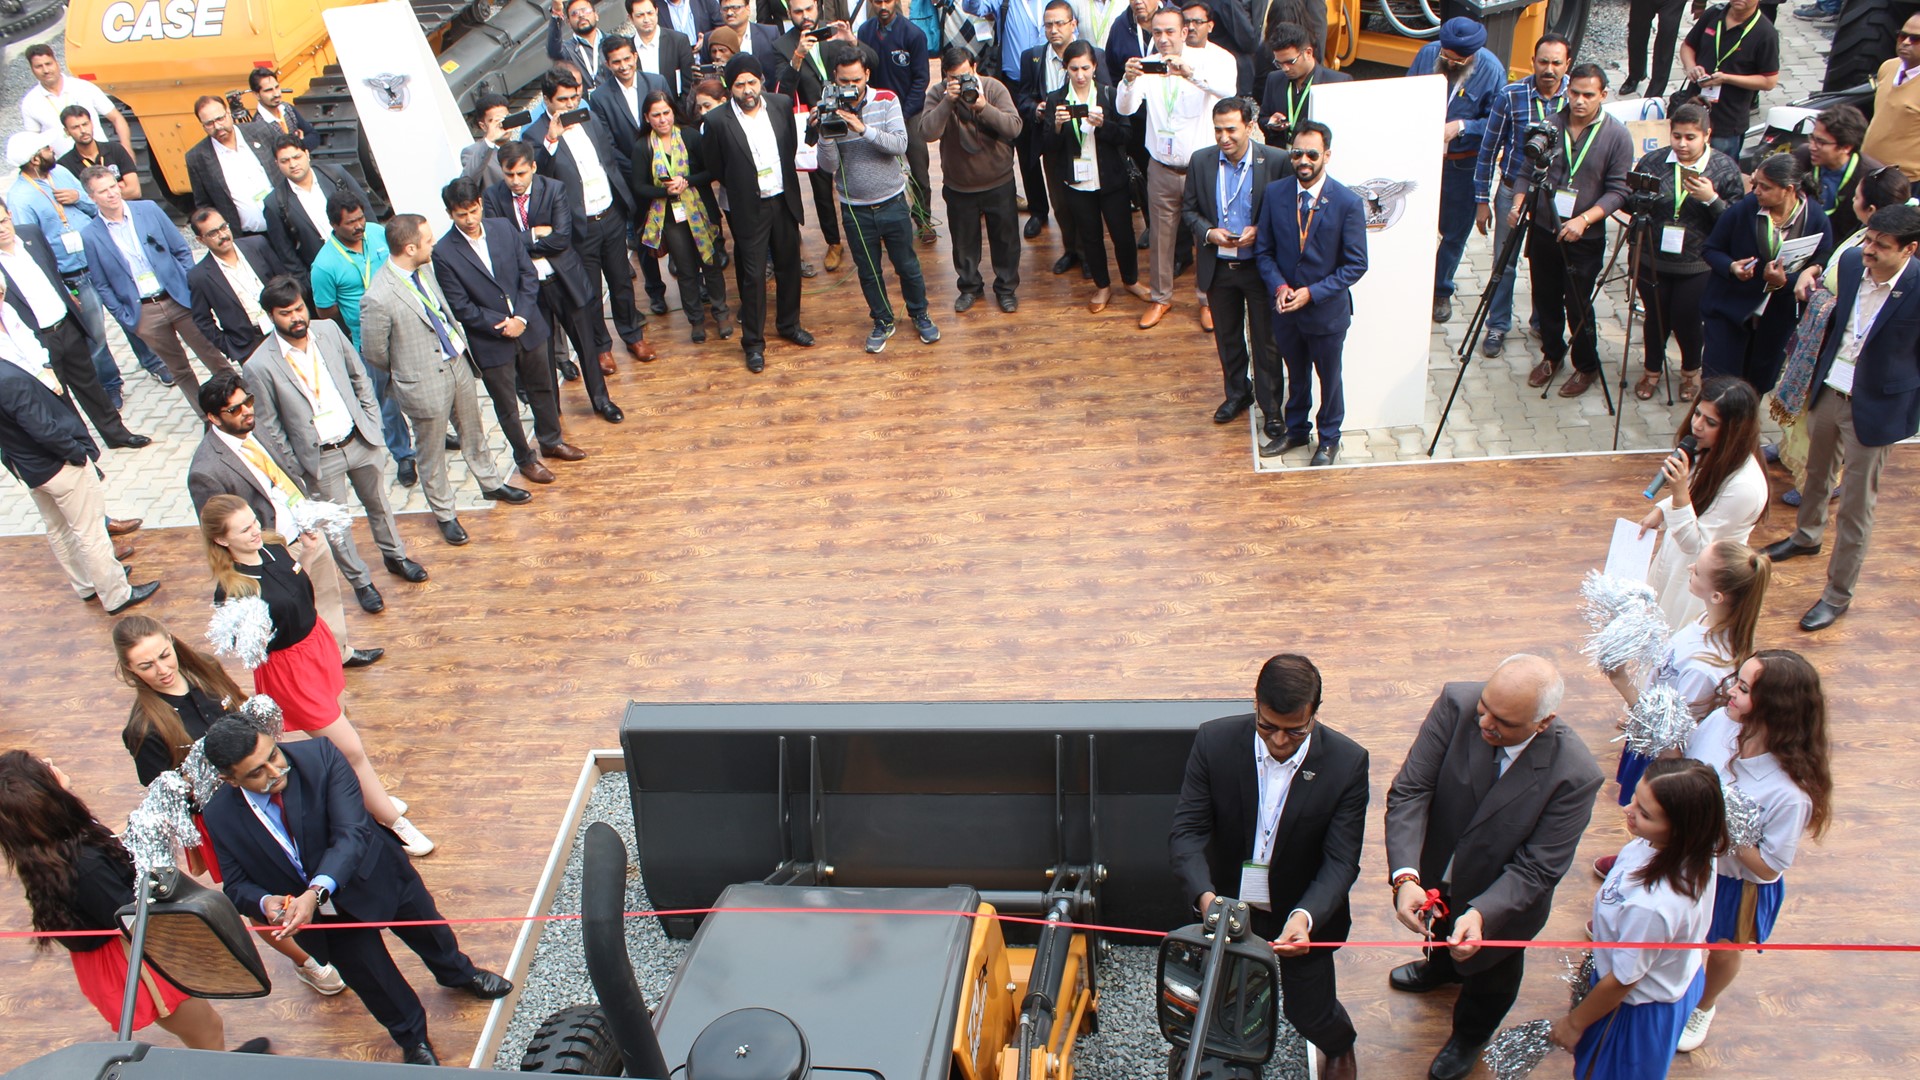 BAUMA CONEXPO INDIA launch of CASE Eagle Eye Telematics